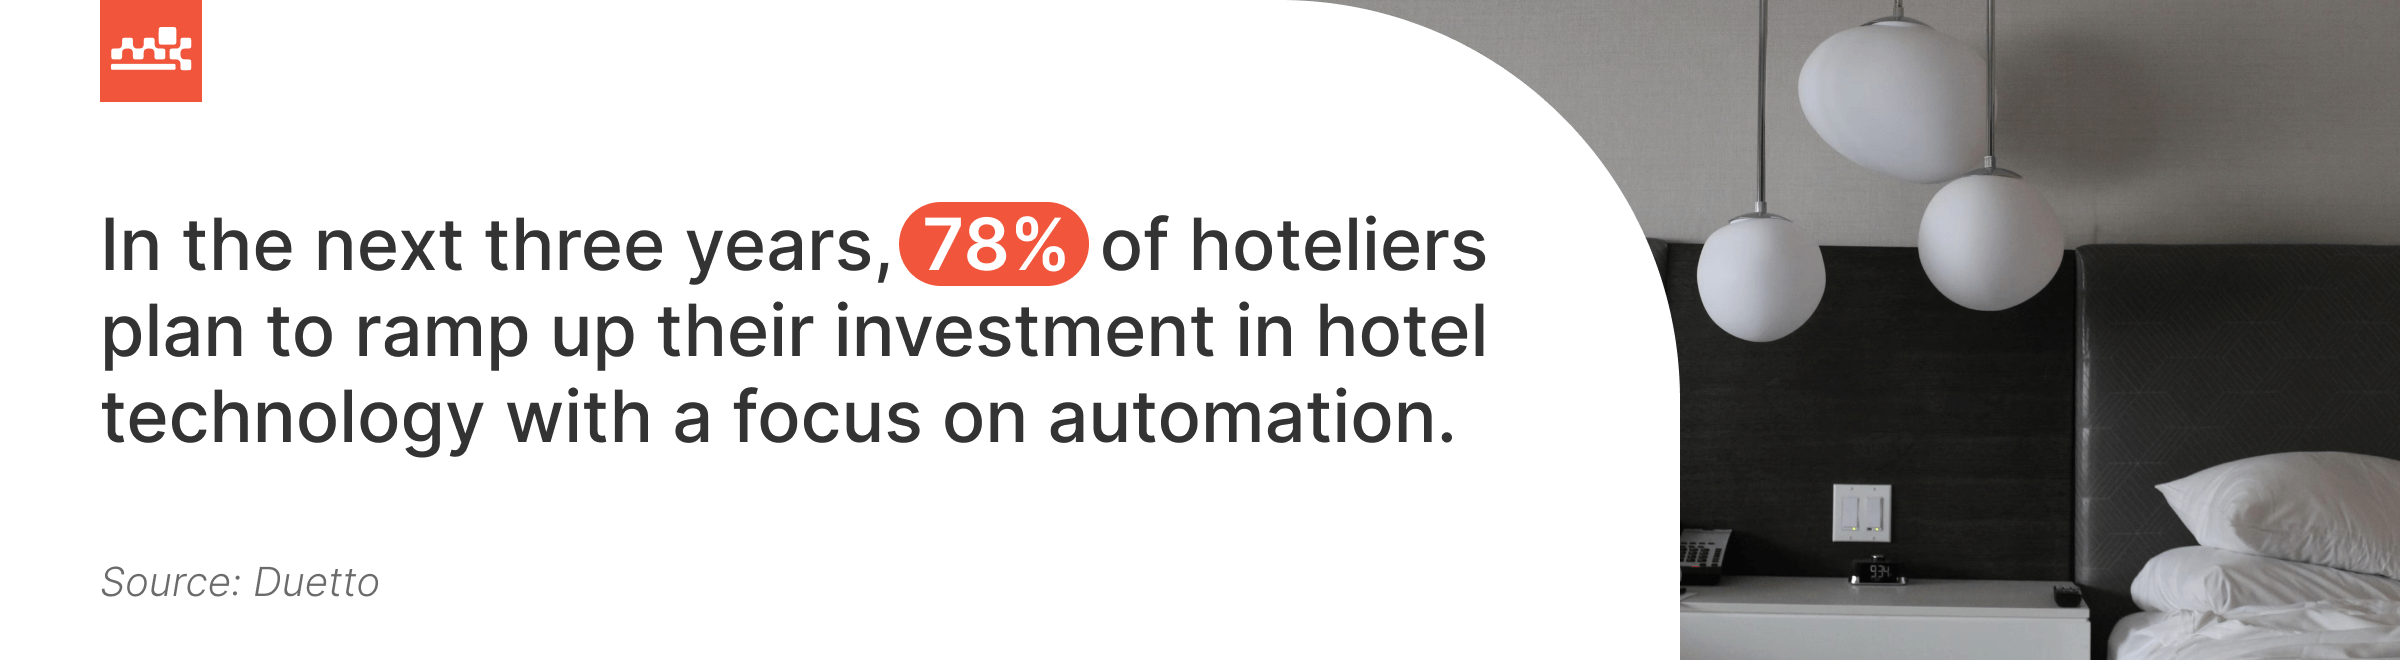 hotel technology investments statistics